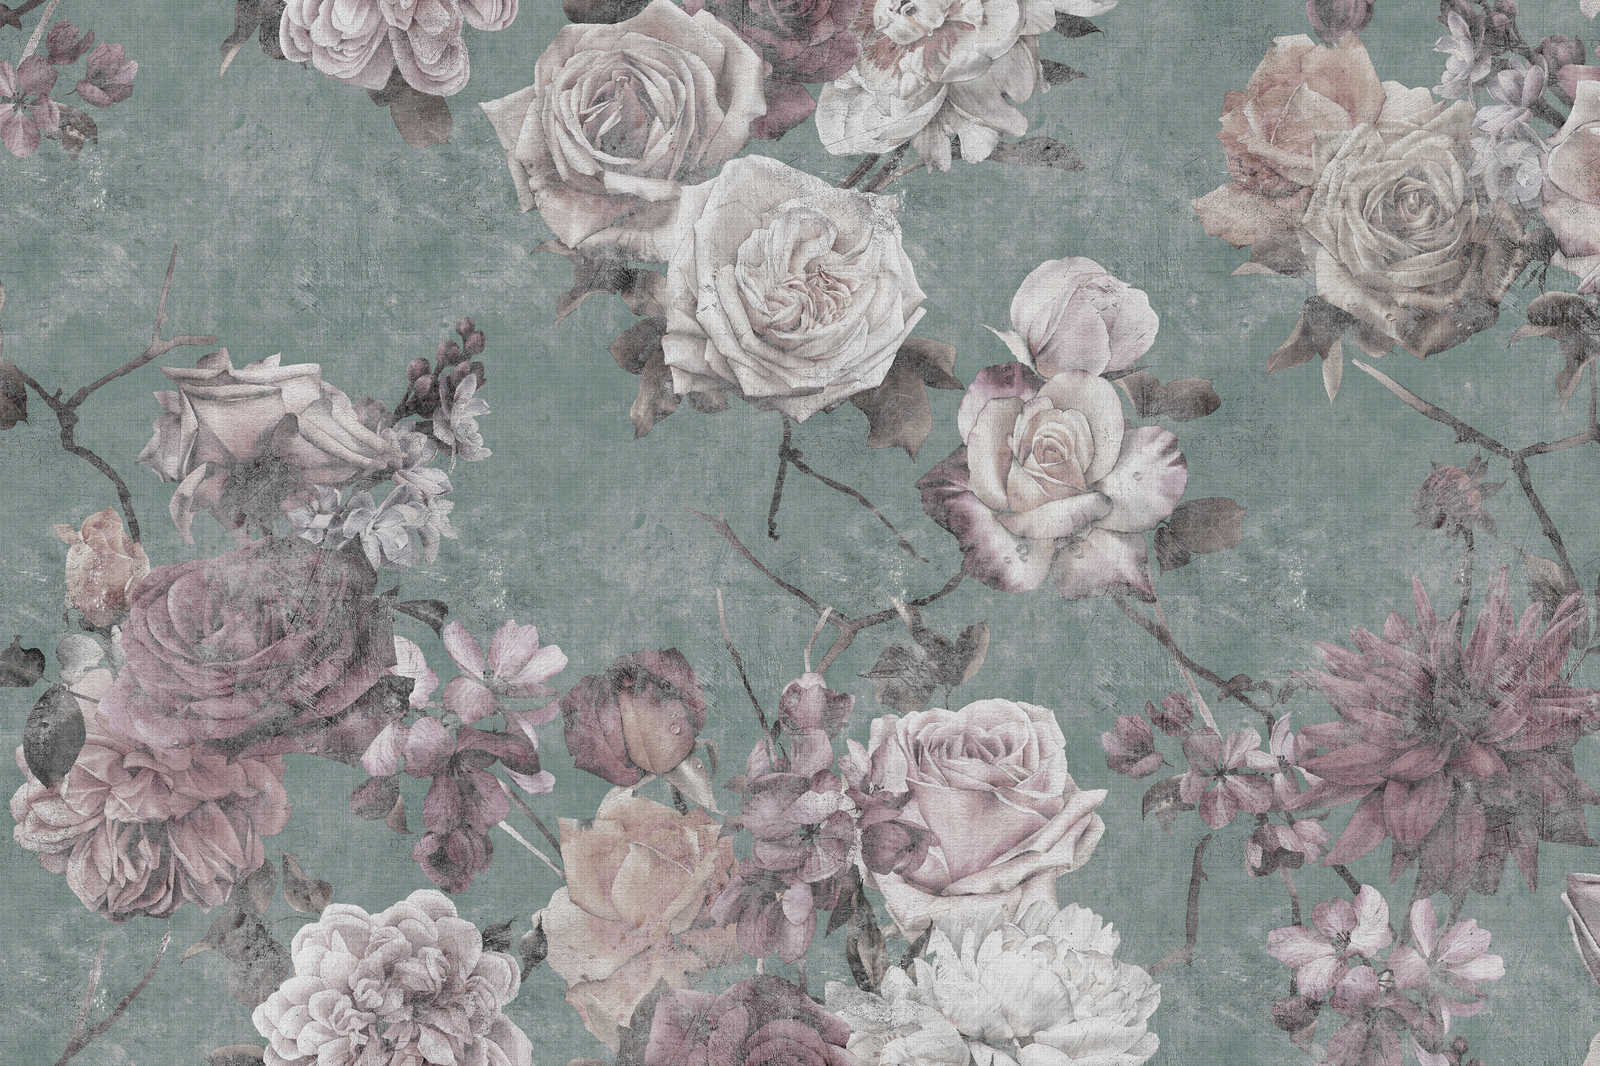             Sleeping Beauty 2 - Leinwandbild Rosenblüten im Vintage Stil – 1,20 m x 0,80 m
        